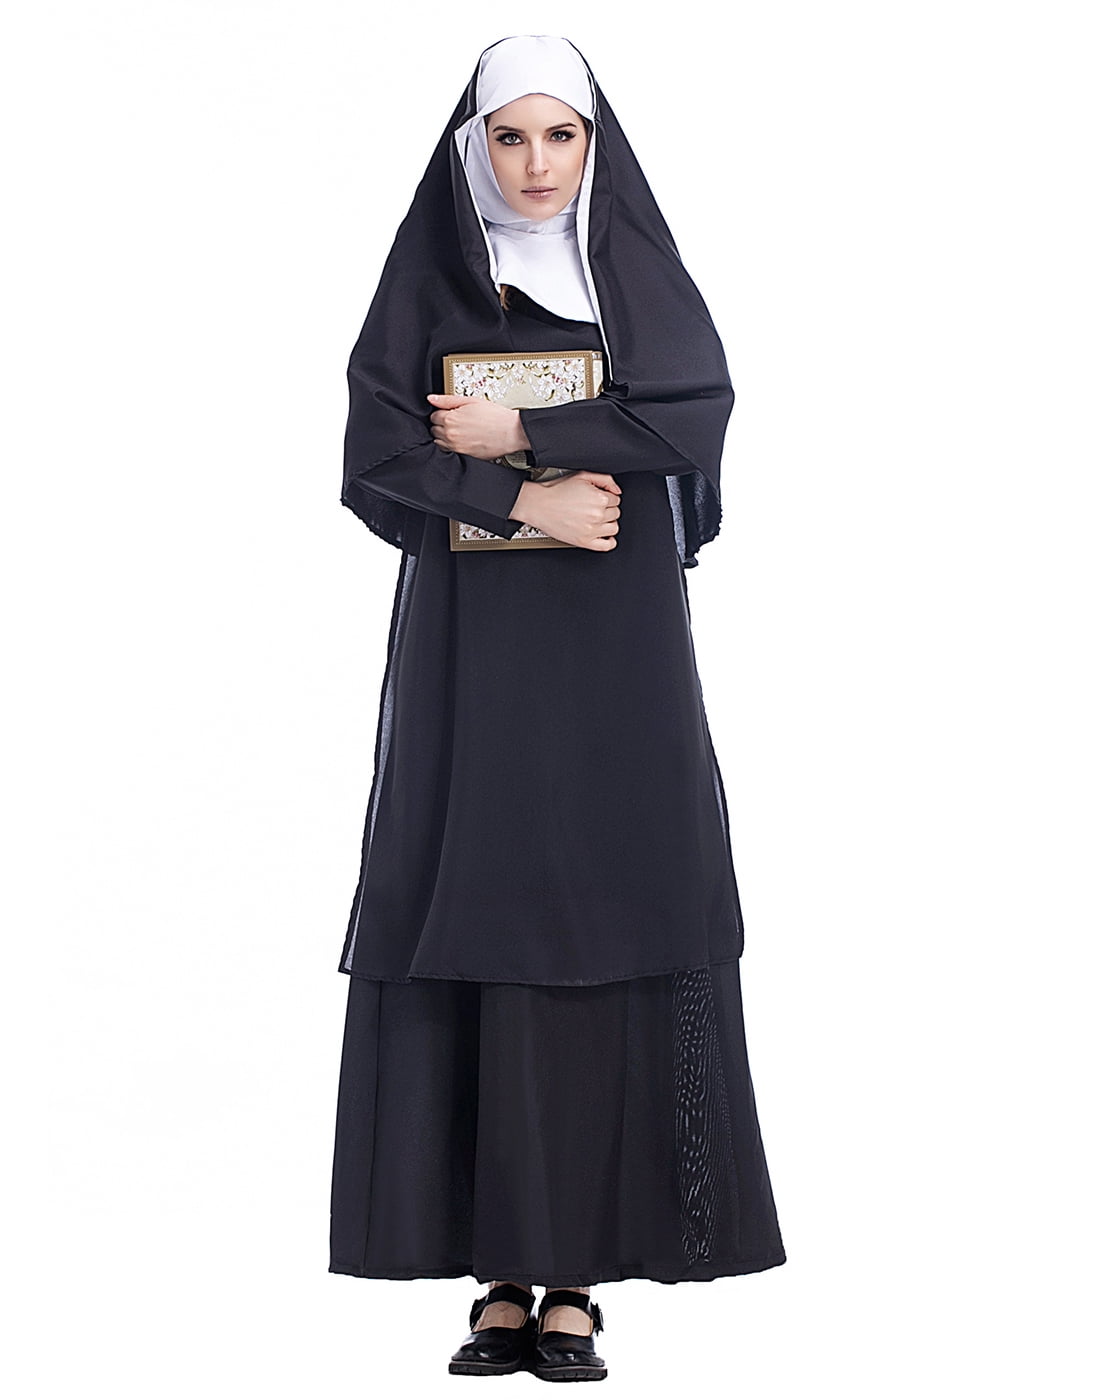 Nun Sound of Music Ladies Fancy Dress Religious Chuch Habit Costume Plus Size XL 